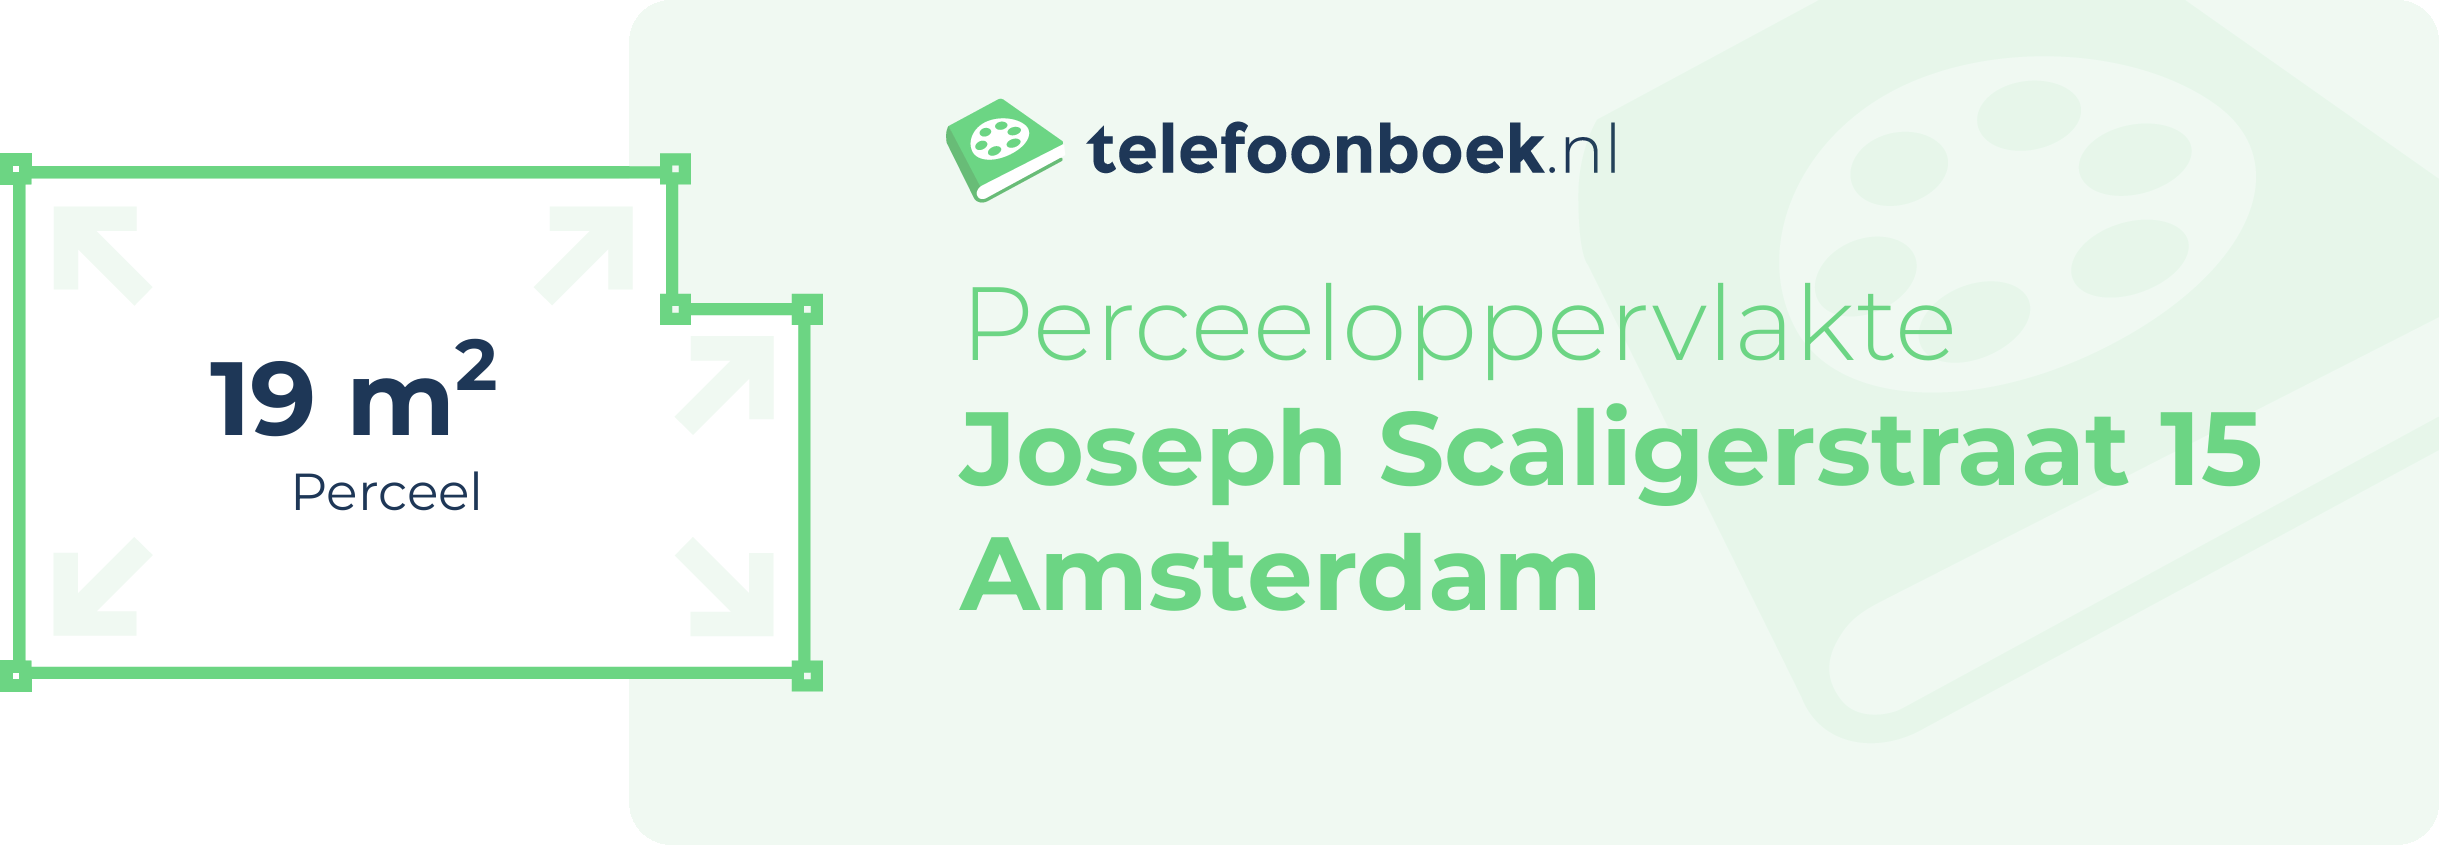 Perceeloppervlakte Joseph Scaligerstraat 15 Amsterdam